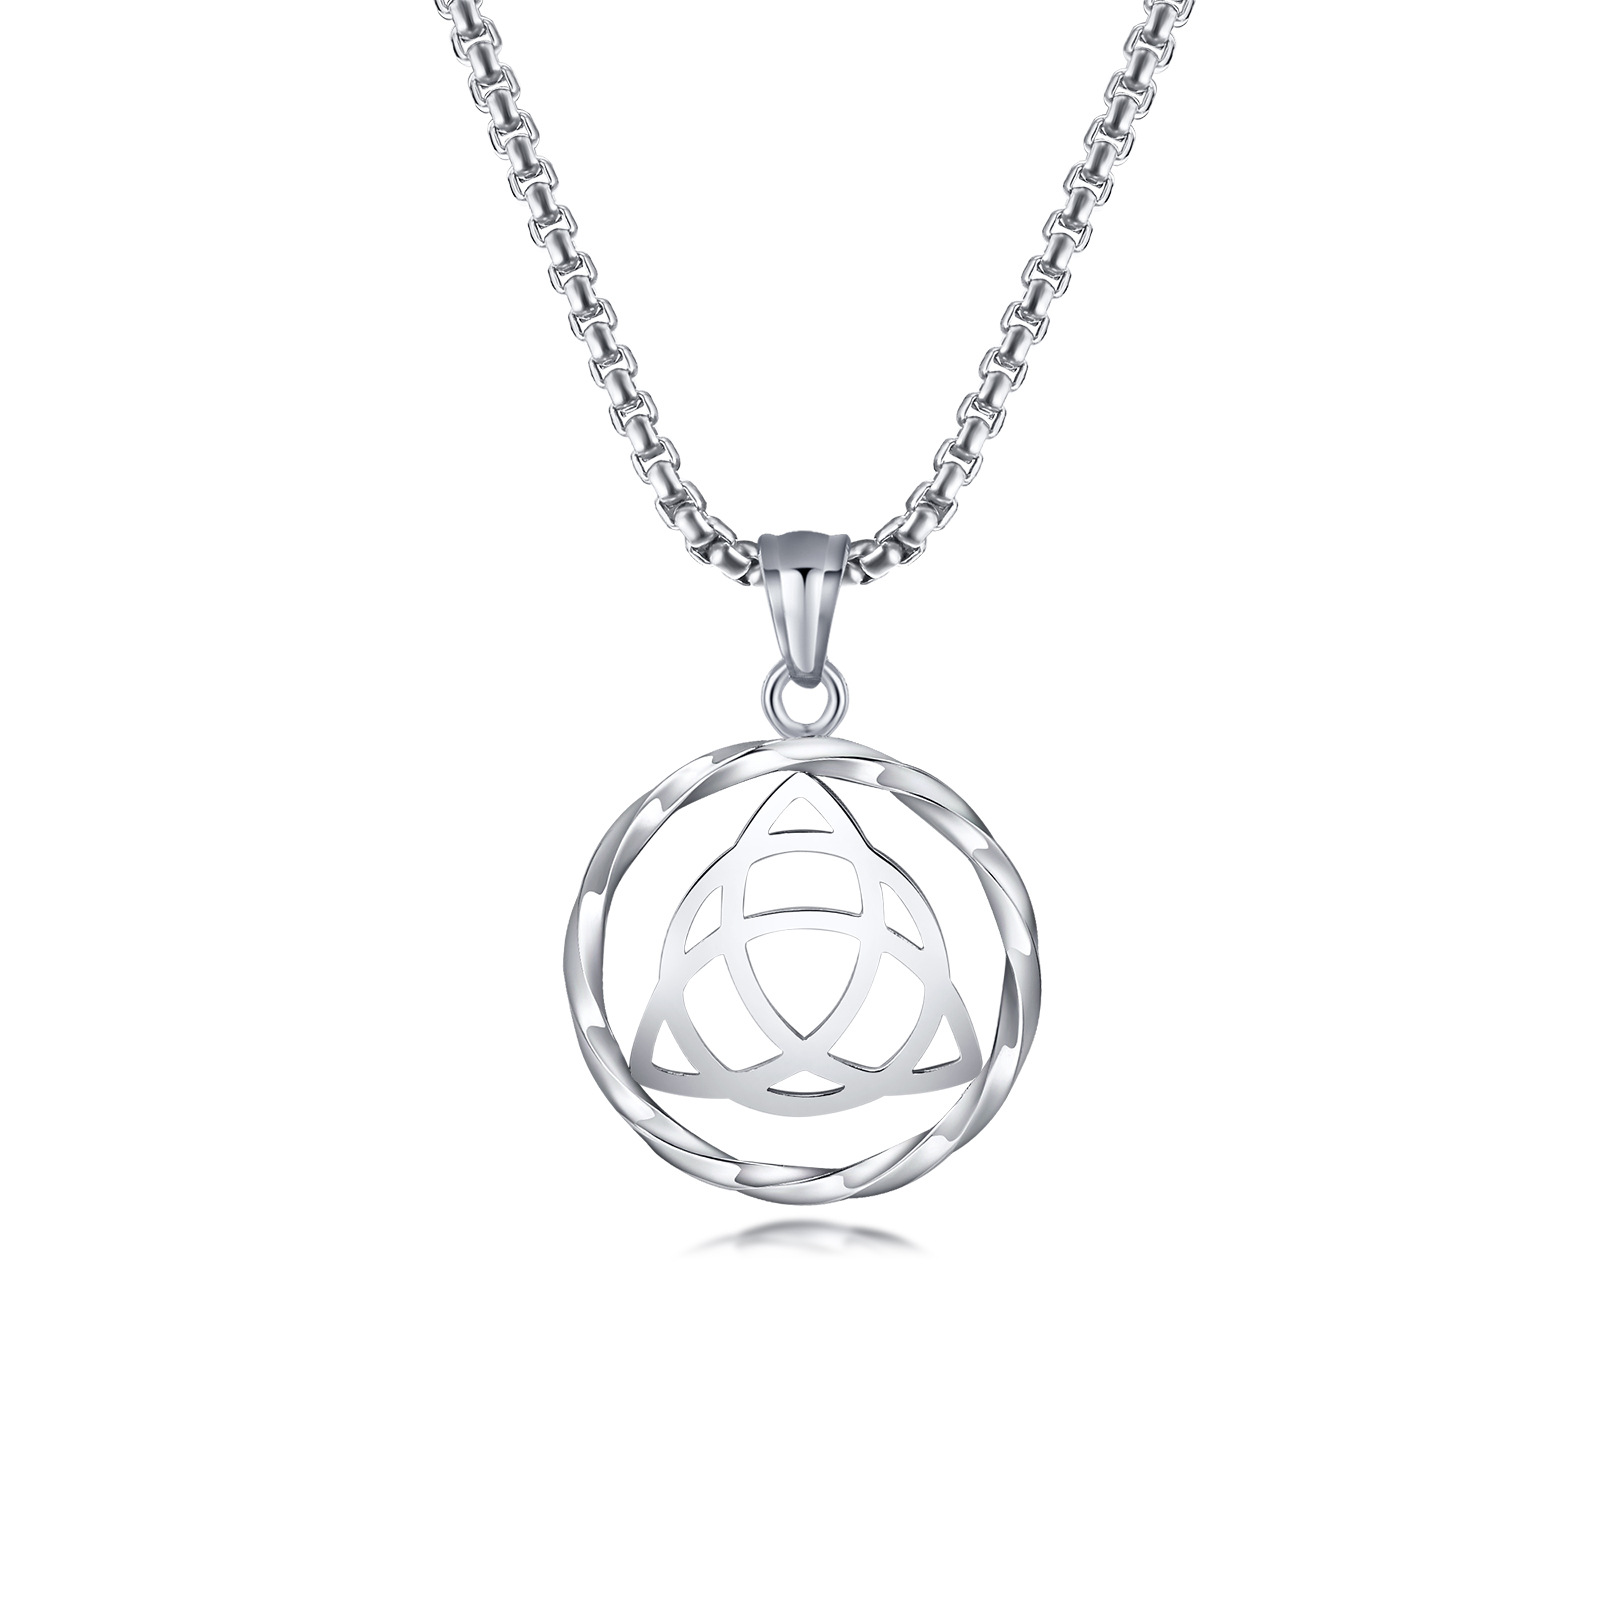 Celtic symbol pendant with chain